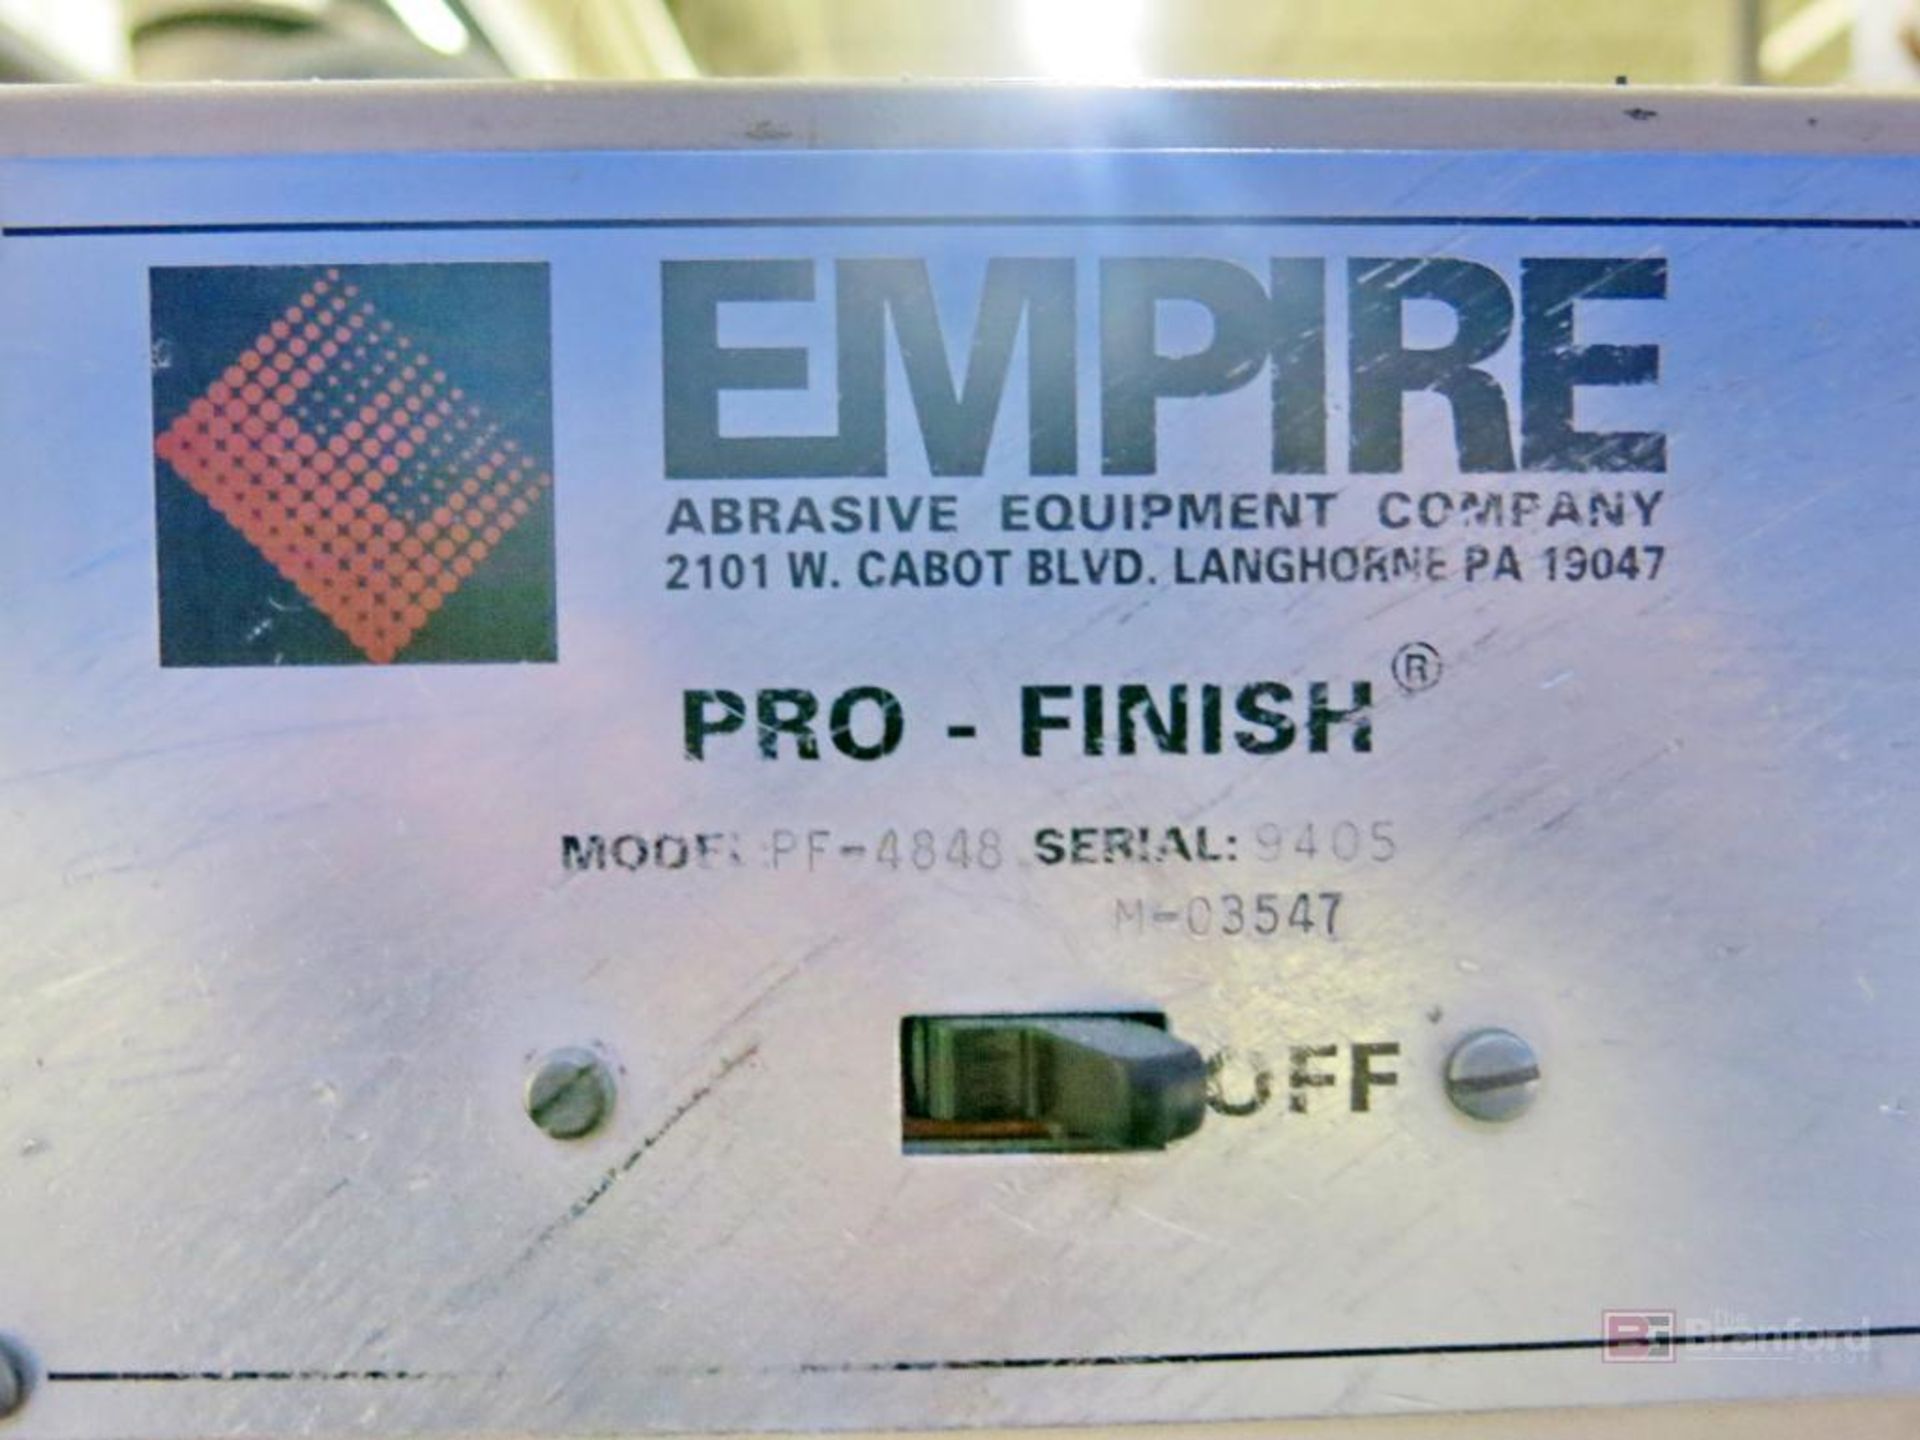 Empire Pro Finish Model 4848 Sand Blast Cabinet - Image 5 of 6